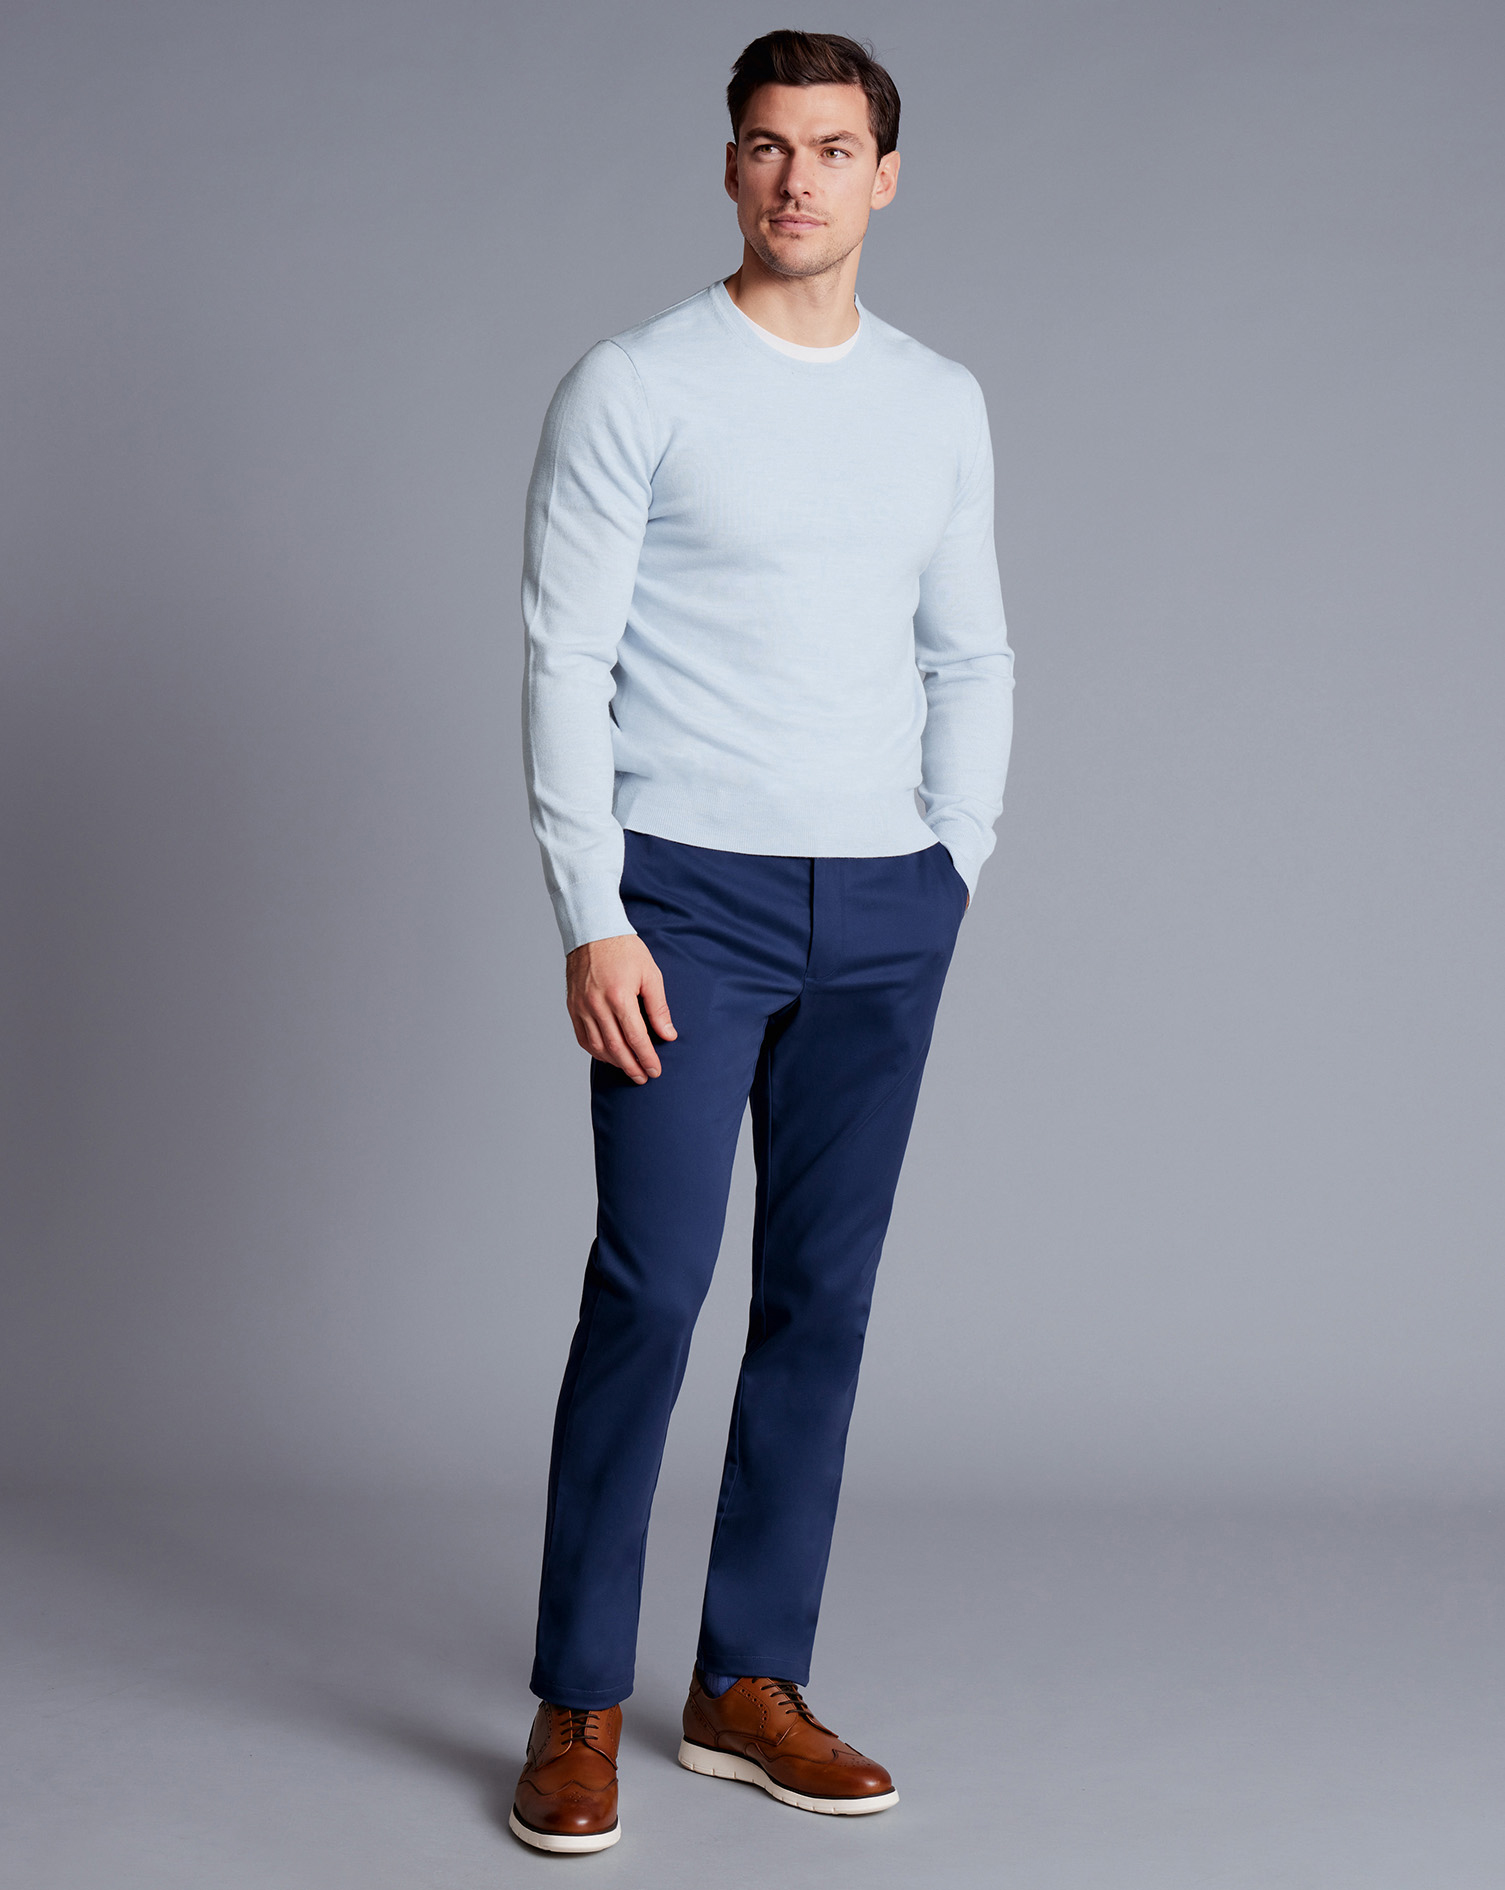 Men's Charles Tyrwhitt Ultimate Non-Iron Chino Pants - Colbalt Blue Size W44 L32 Cotton
